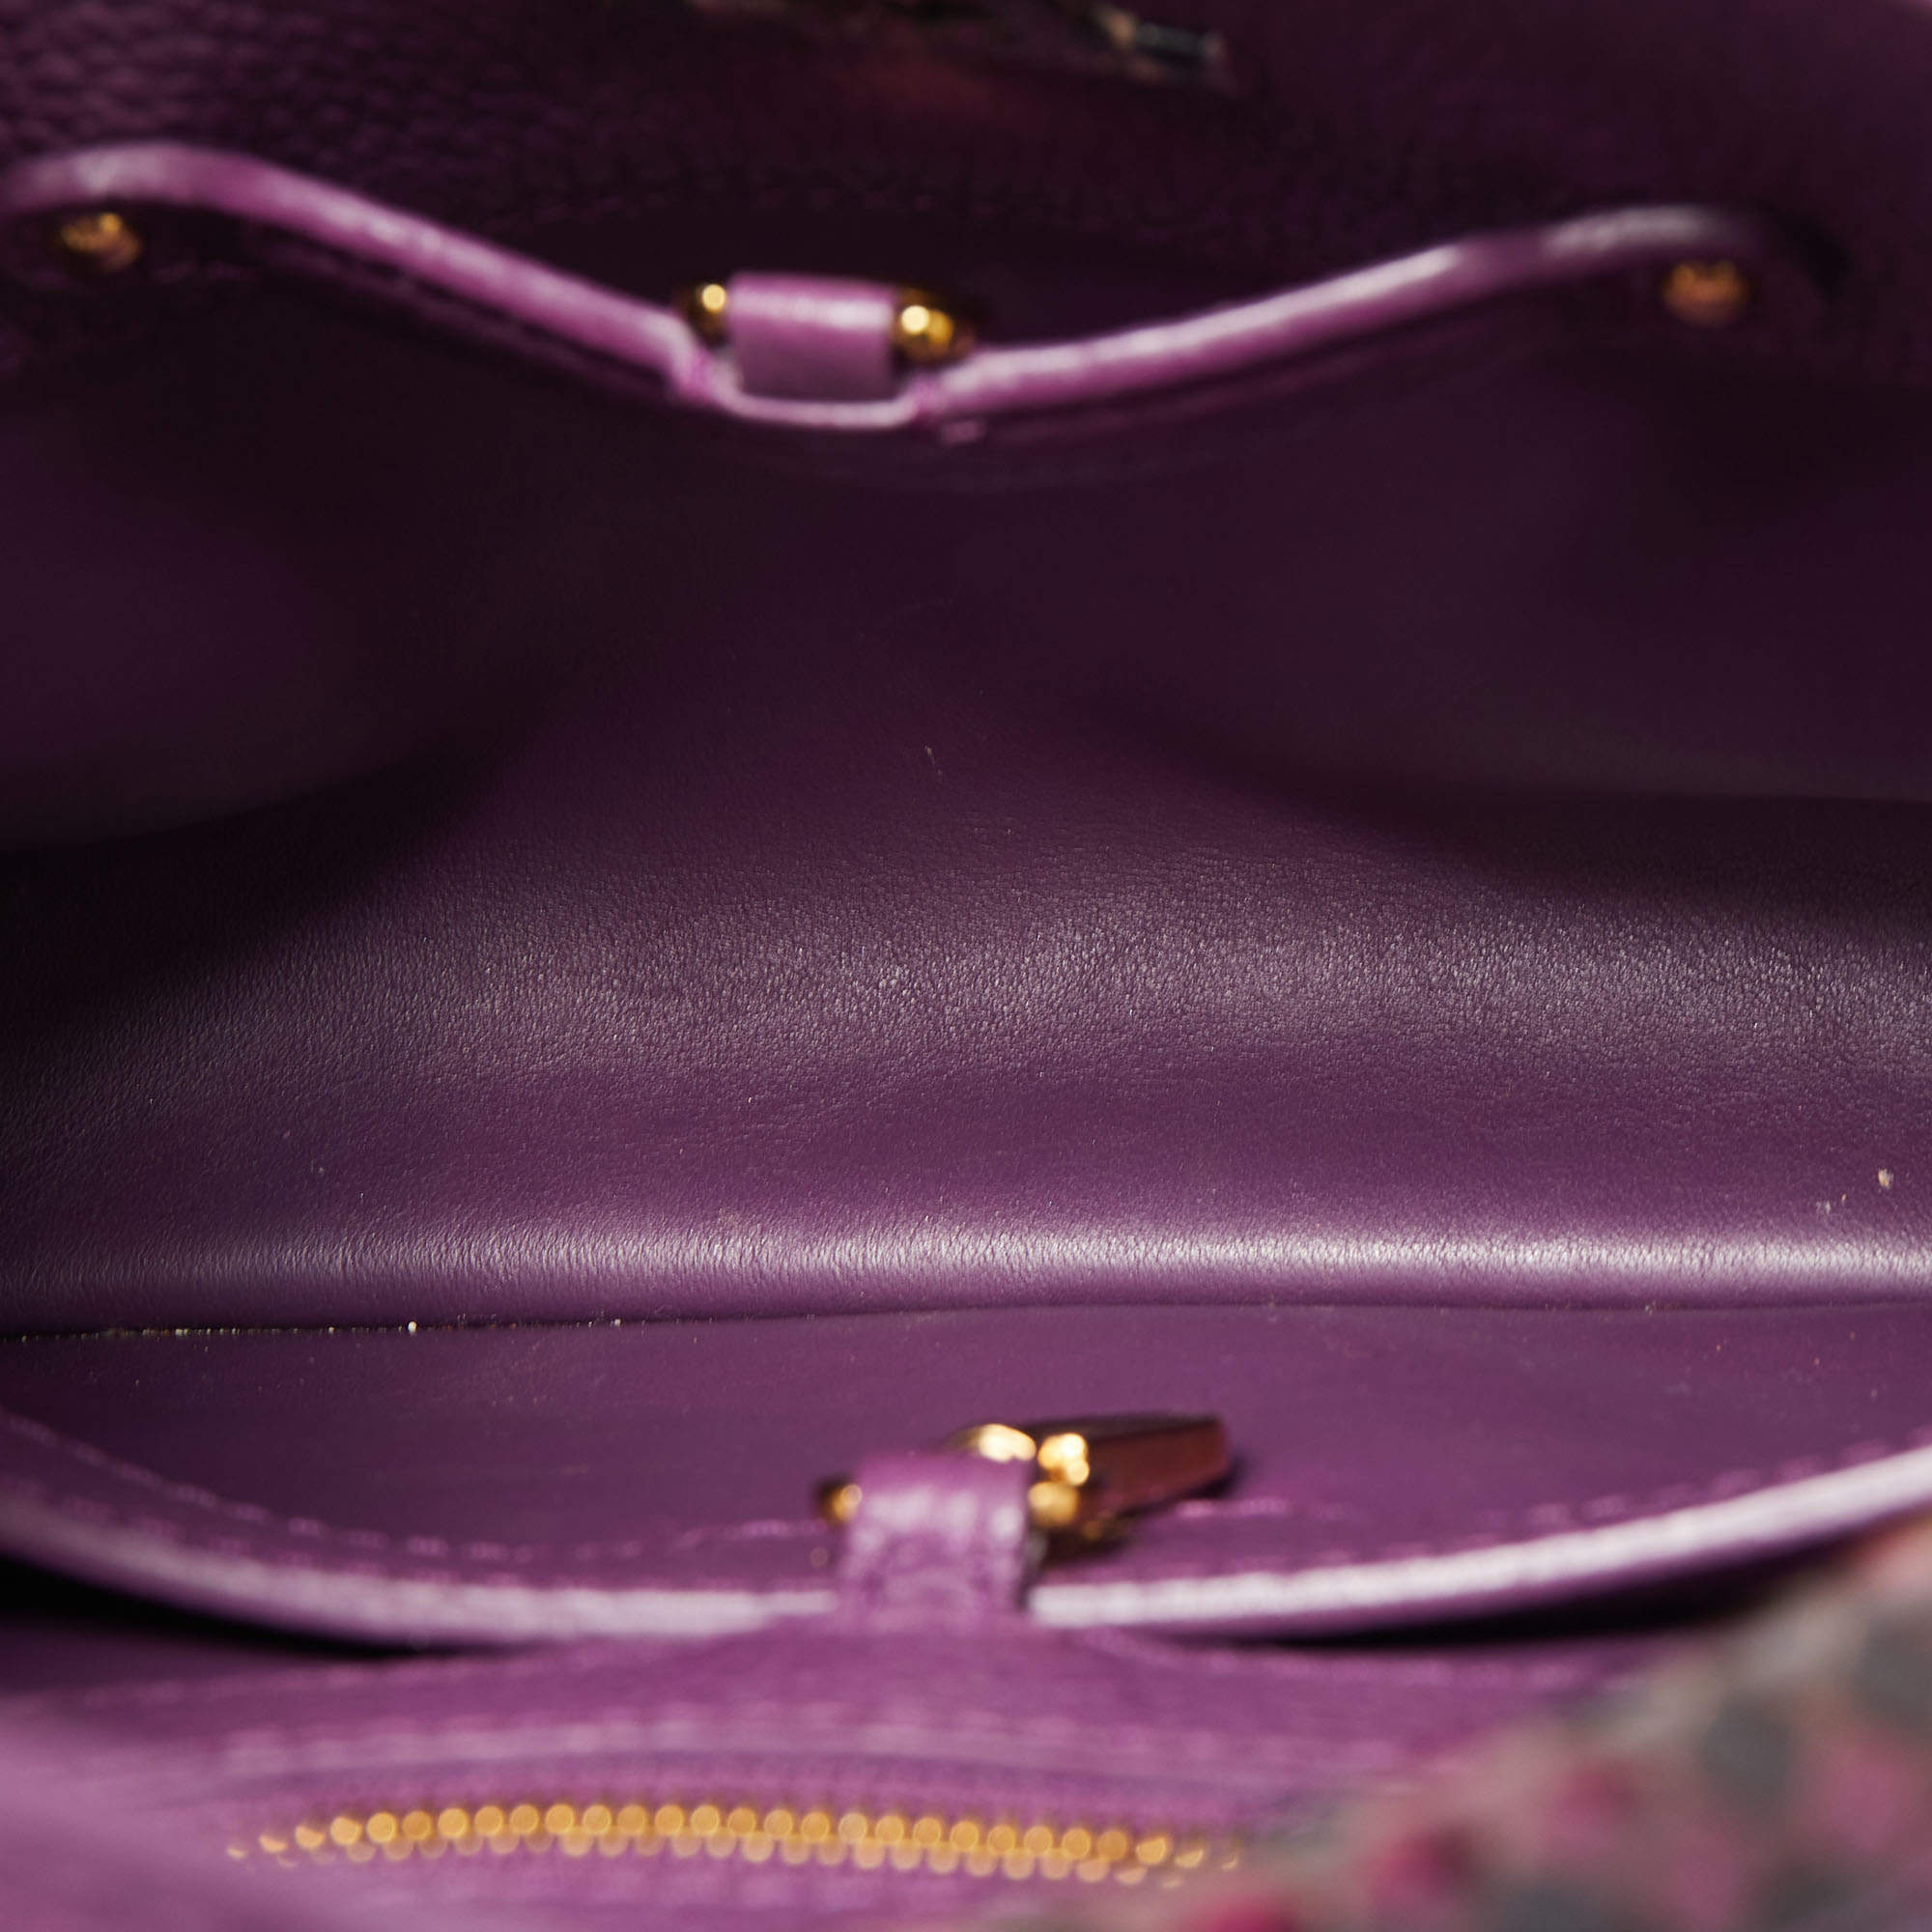 lv purple bag